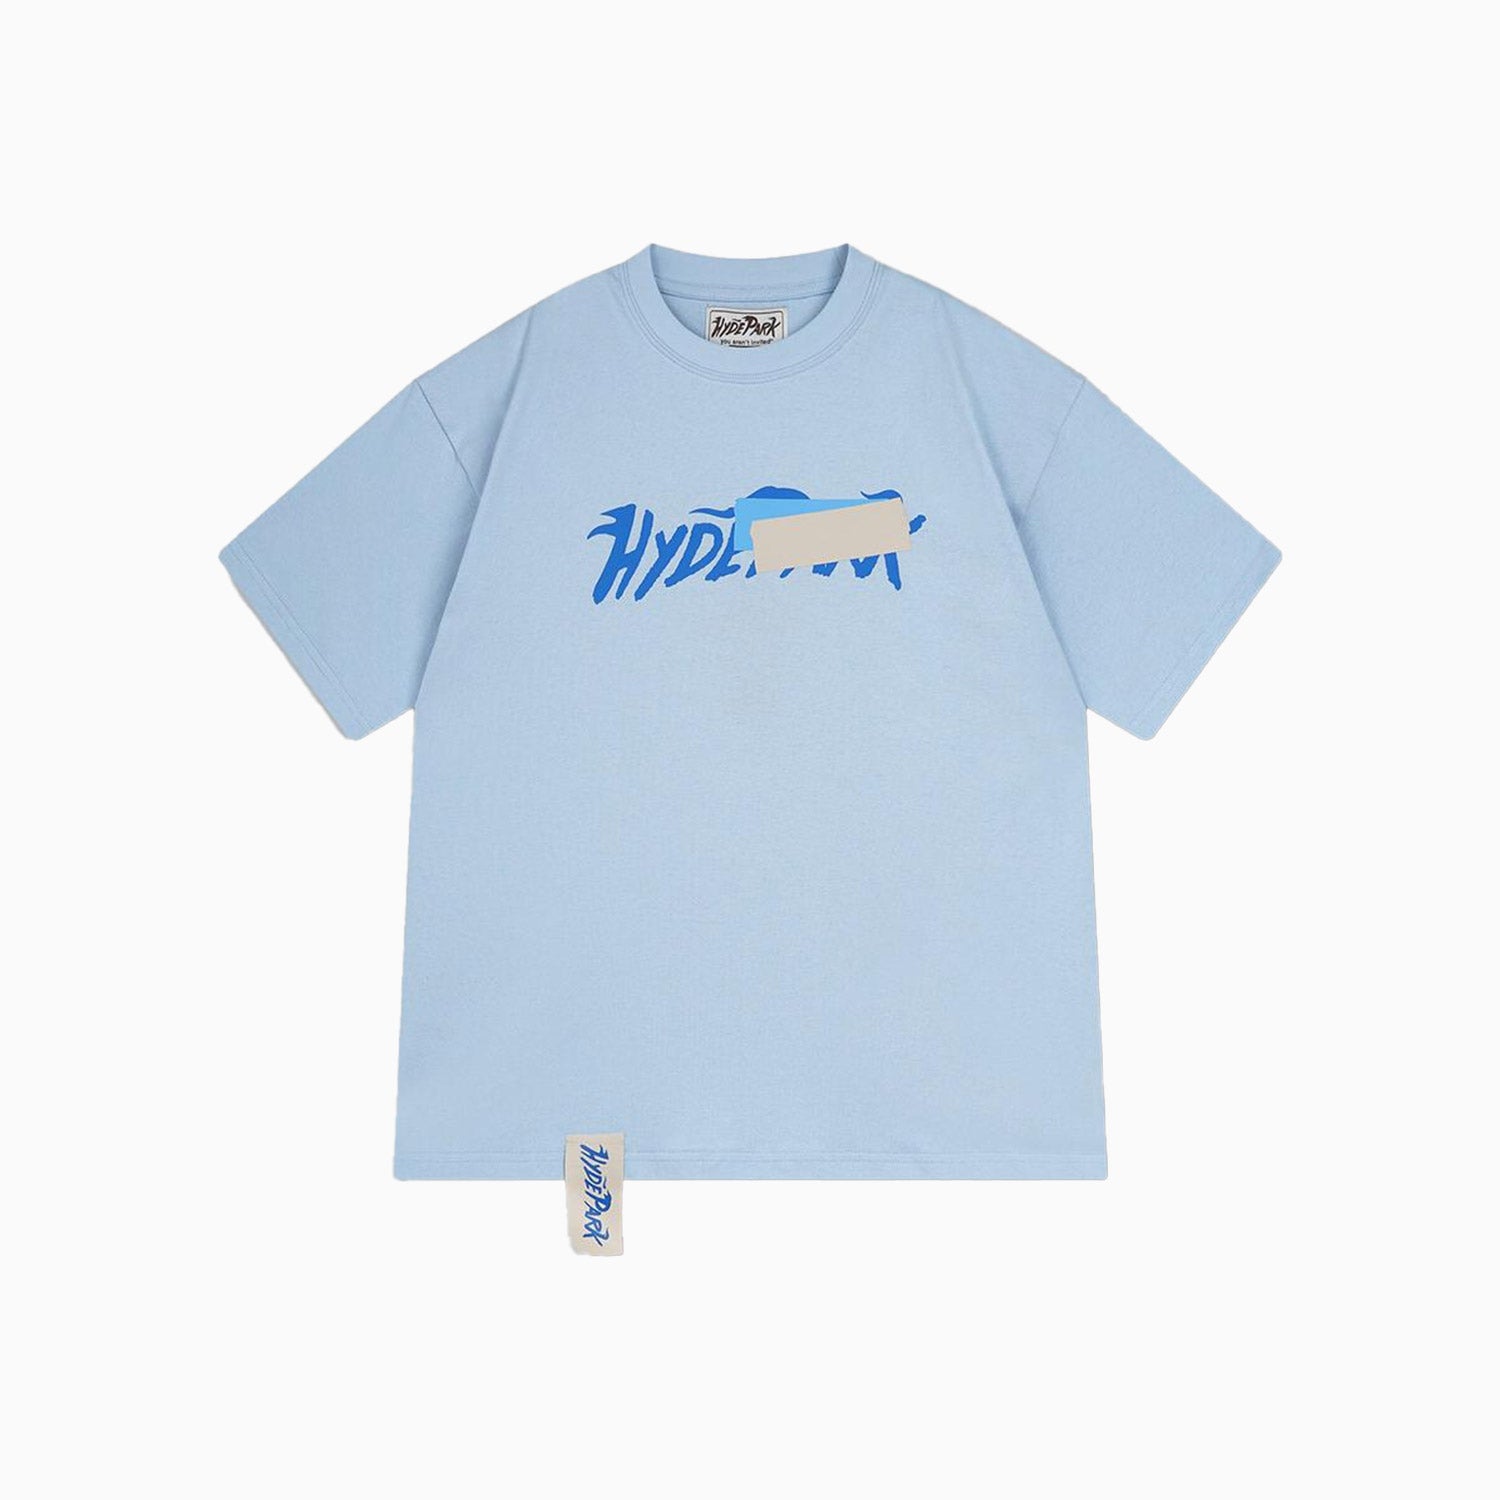 hyde-park-mens-slap-tape-t-shirt-9916380-iceblue